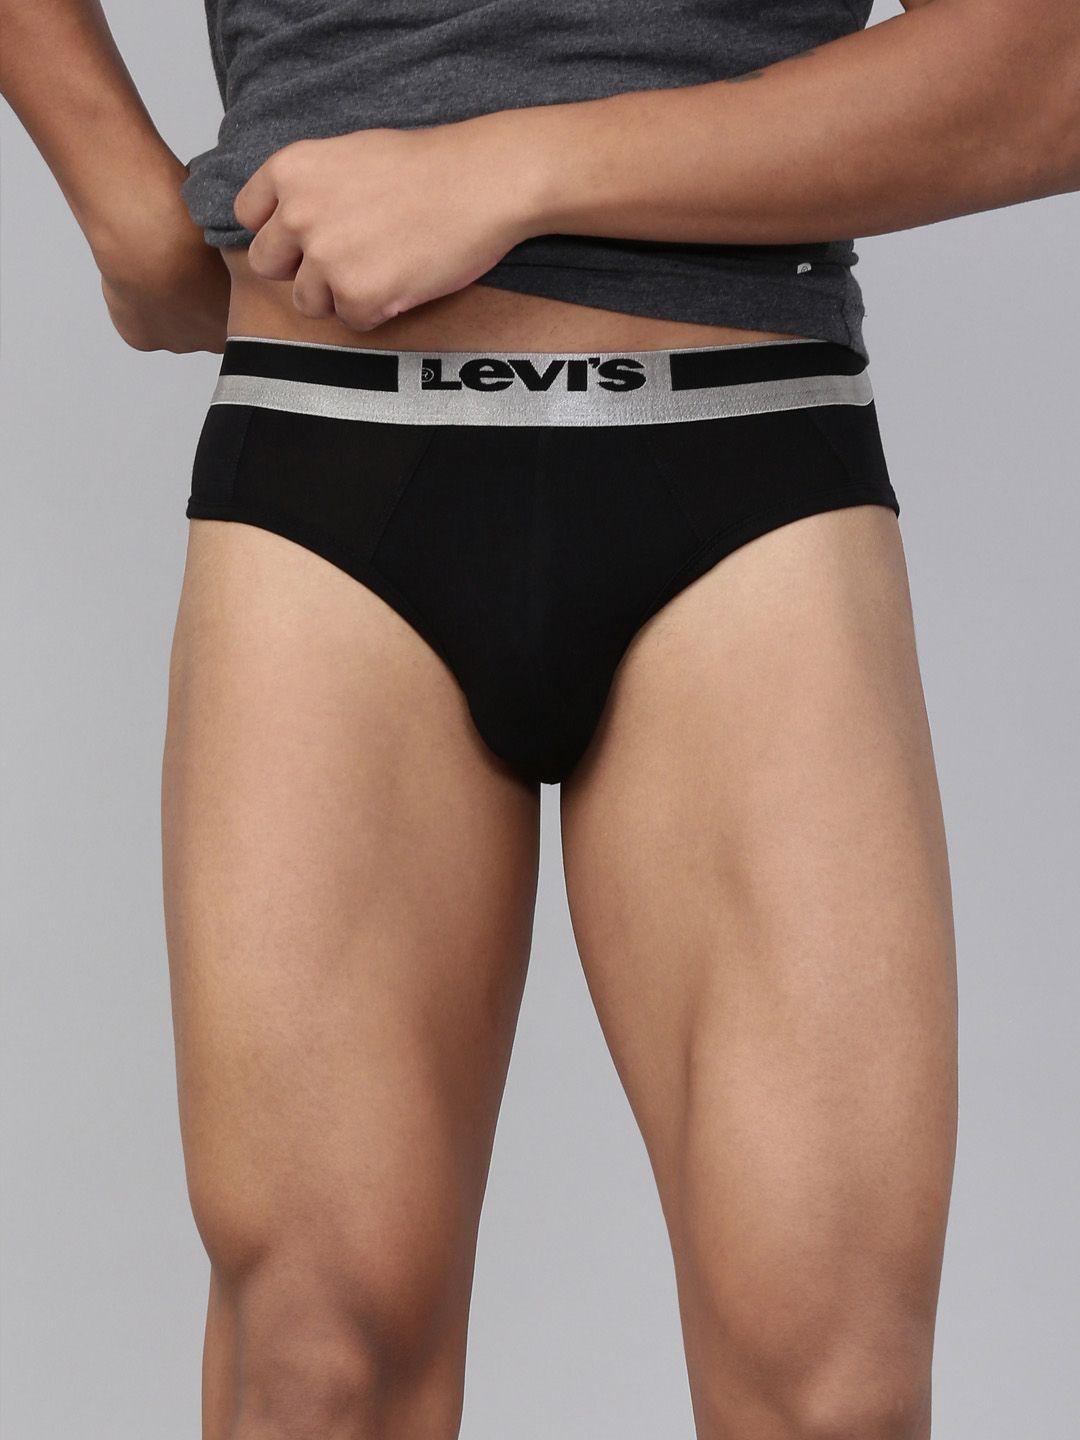 levis-men-smartskin-technology-supima-cotton-prime-briefs-with-tag-free-comfort-#029